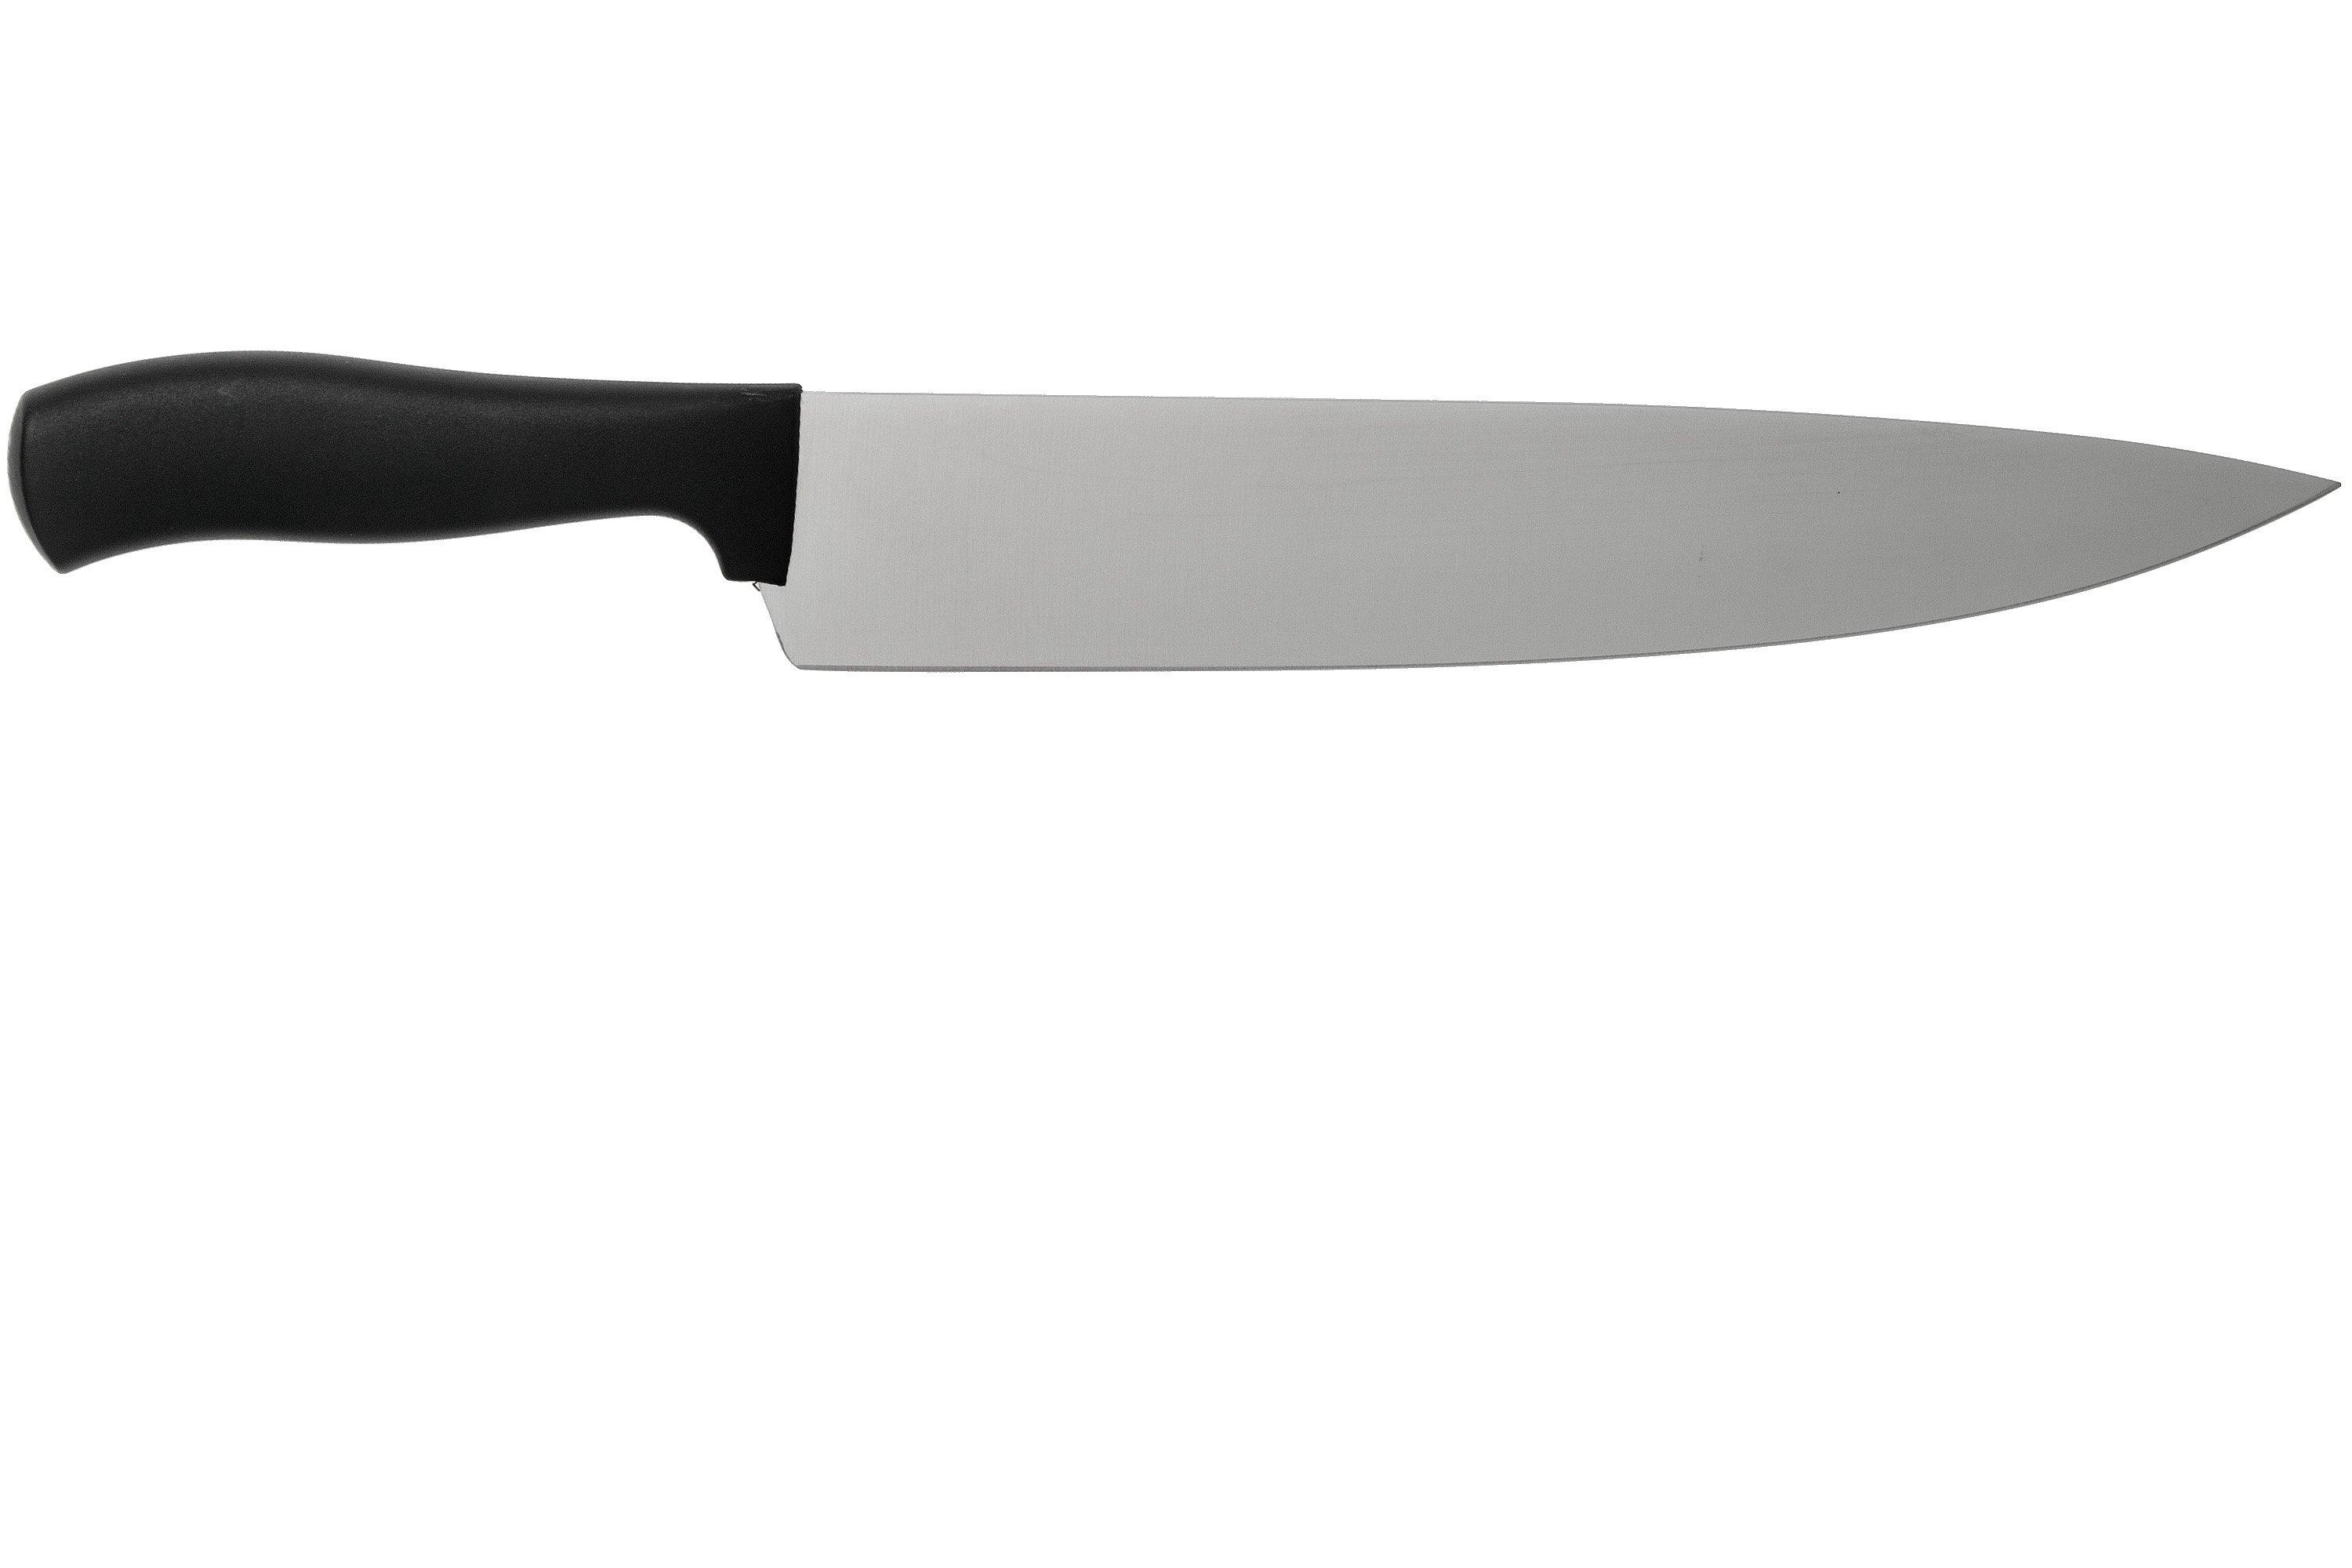 Wüsthof Silverpoint chef's knife 26 cm